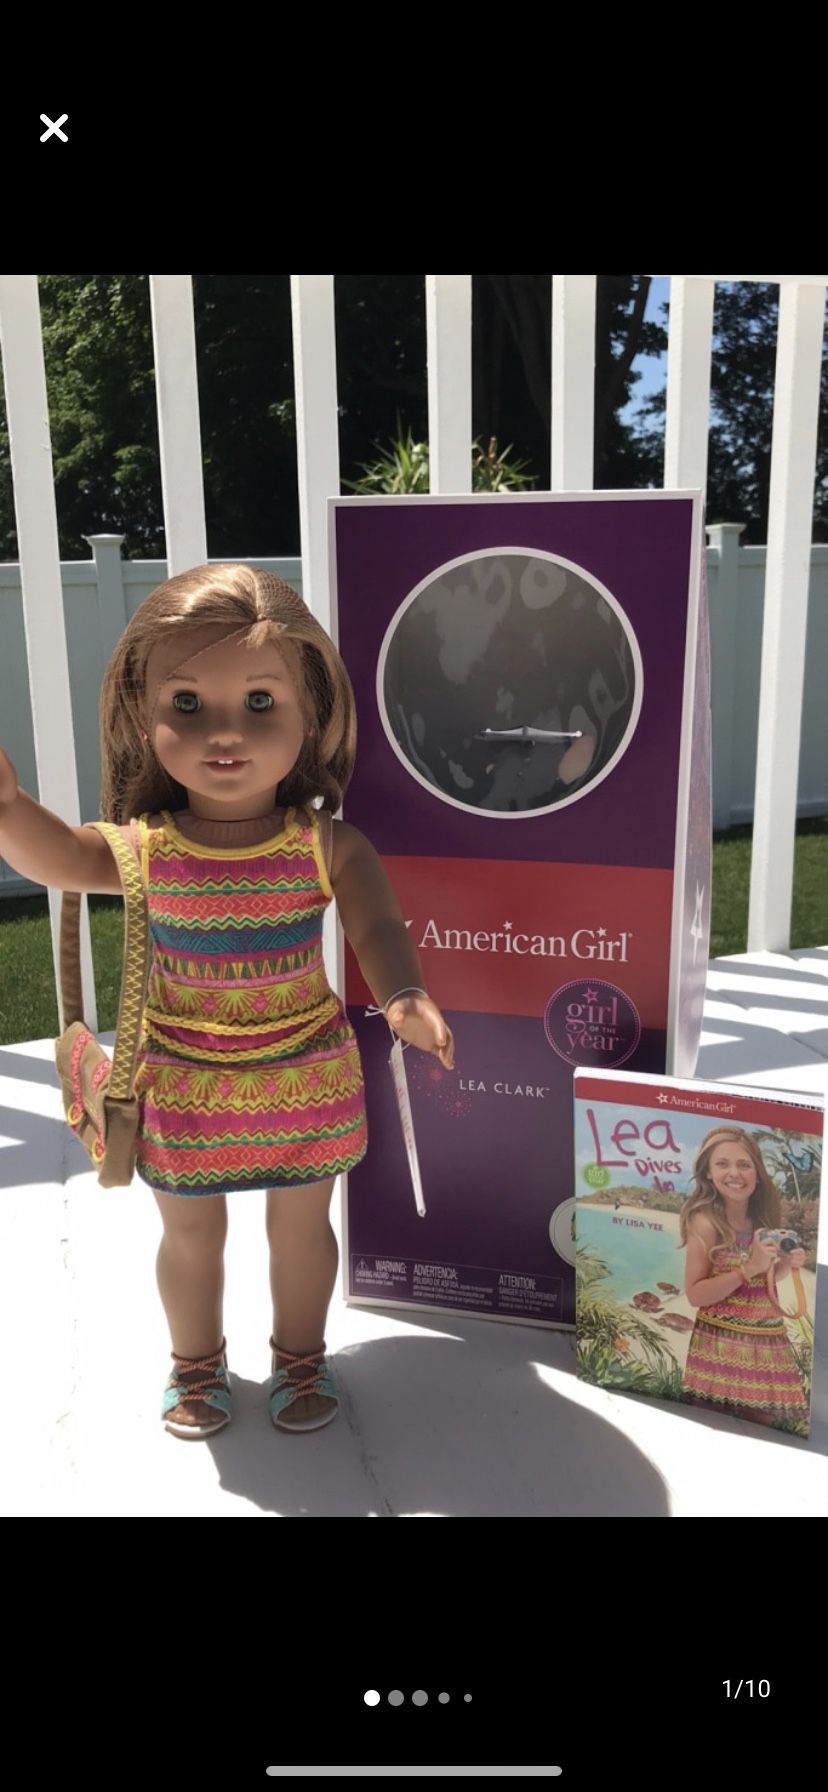 American girl doll Lea Clark doll the year 2016